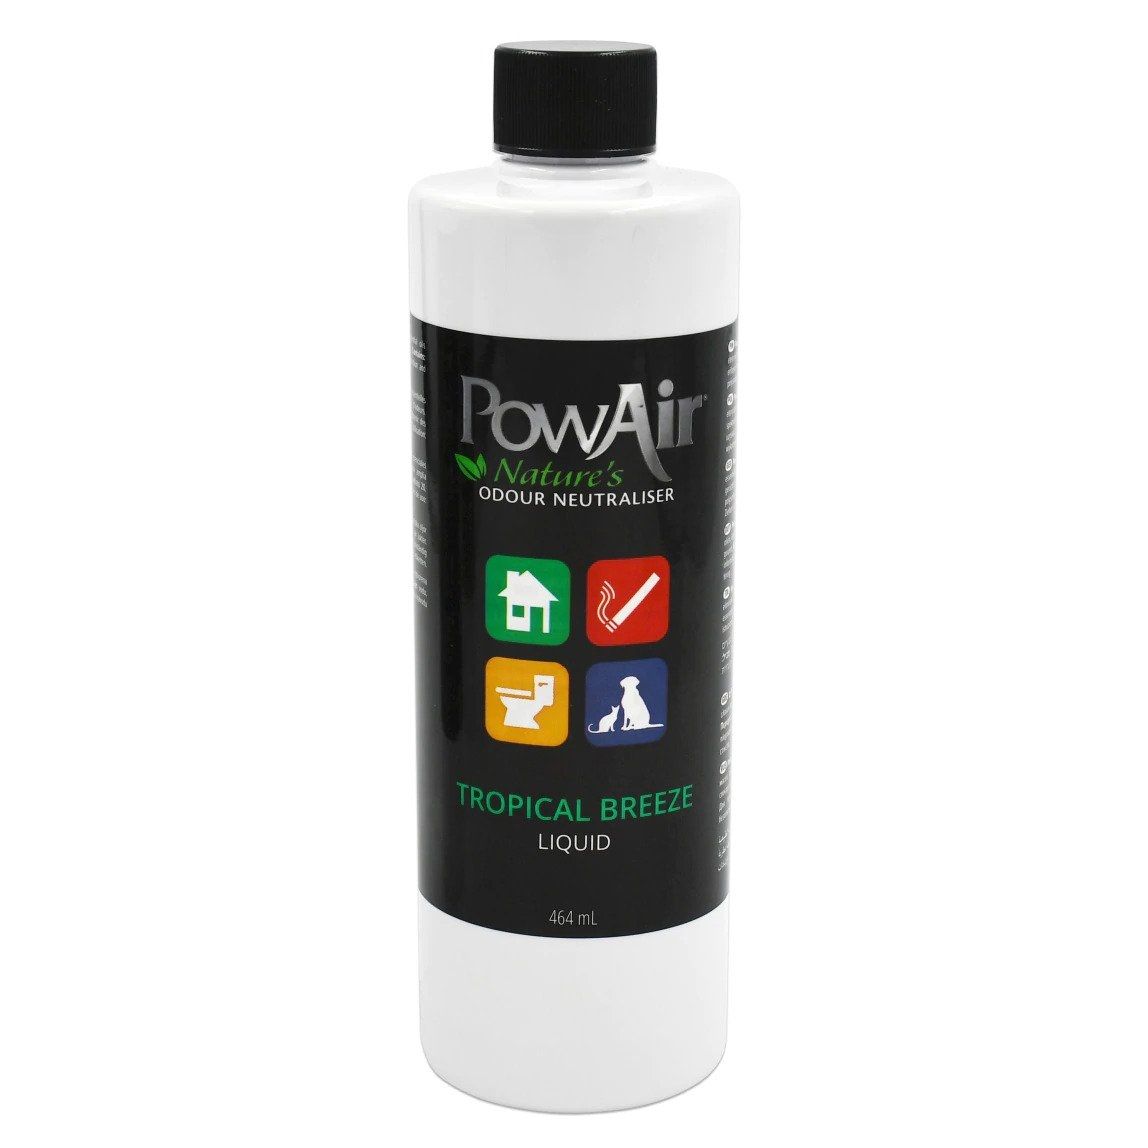 Powair Liquid, Tropical Breeze, 464ml